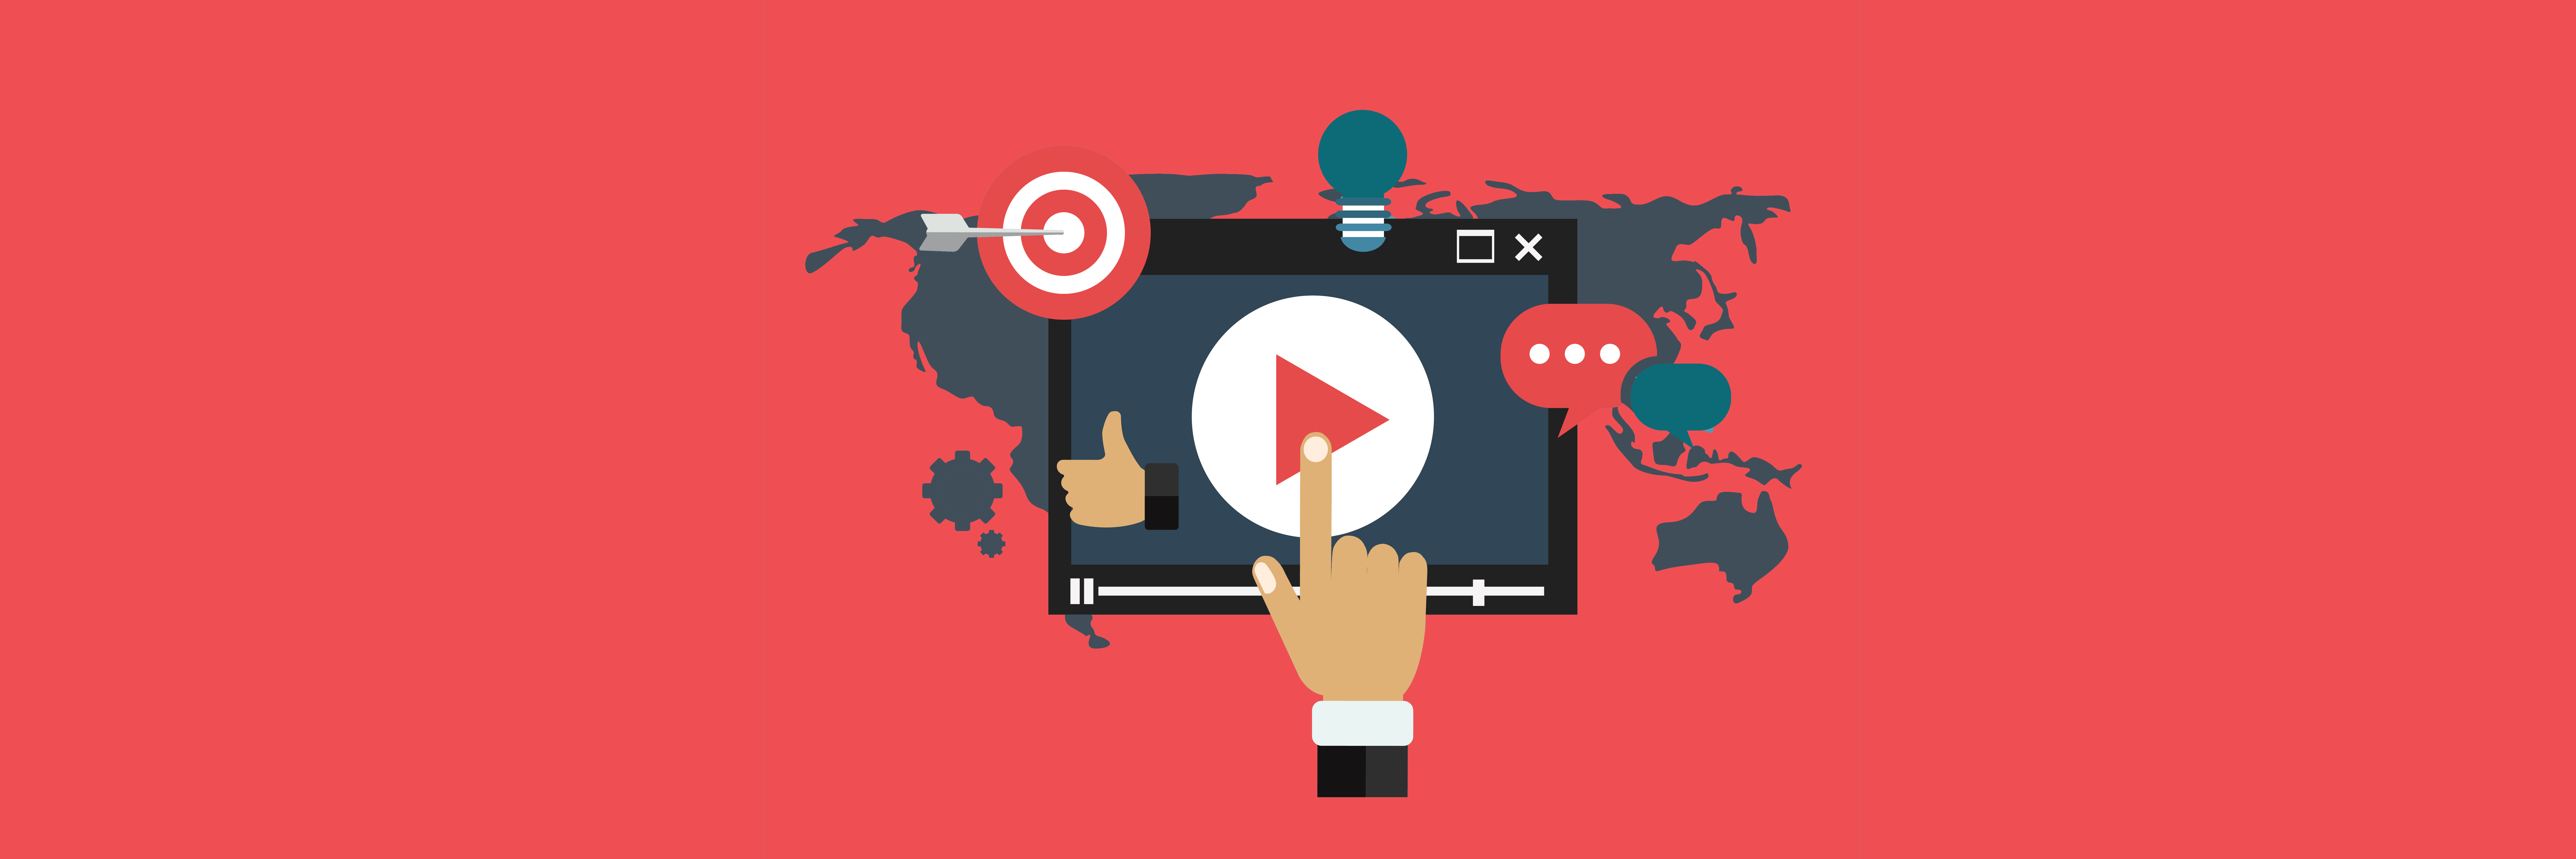 Video Marketing – победител в дигиталните статистики за 2017